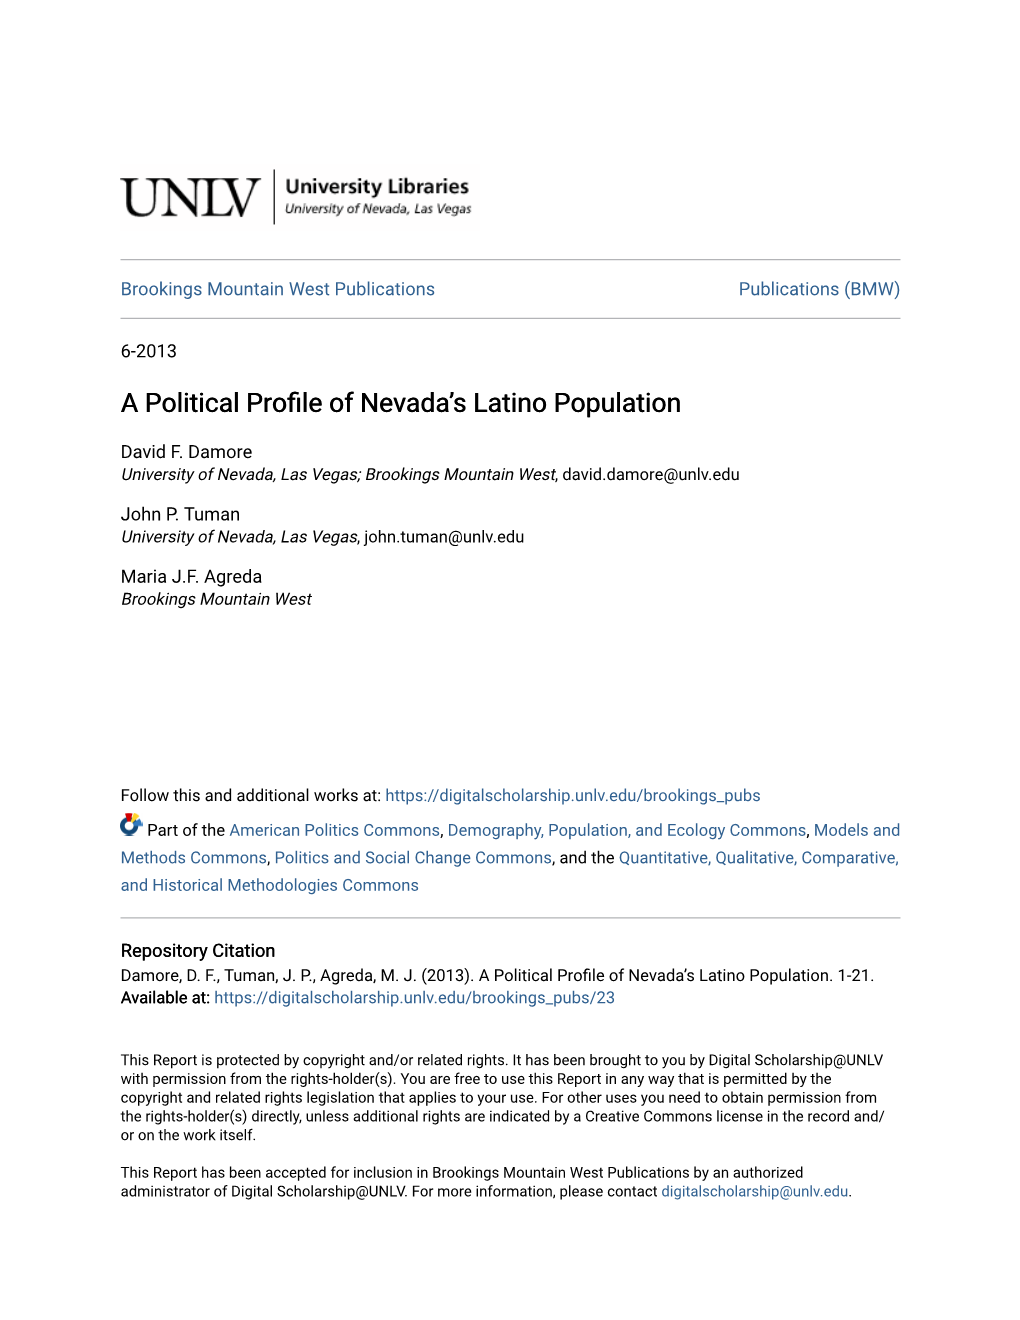 A Political Profile of Nevada's Latino Population